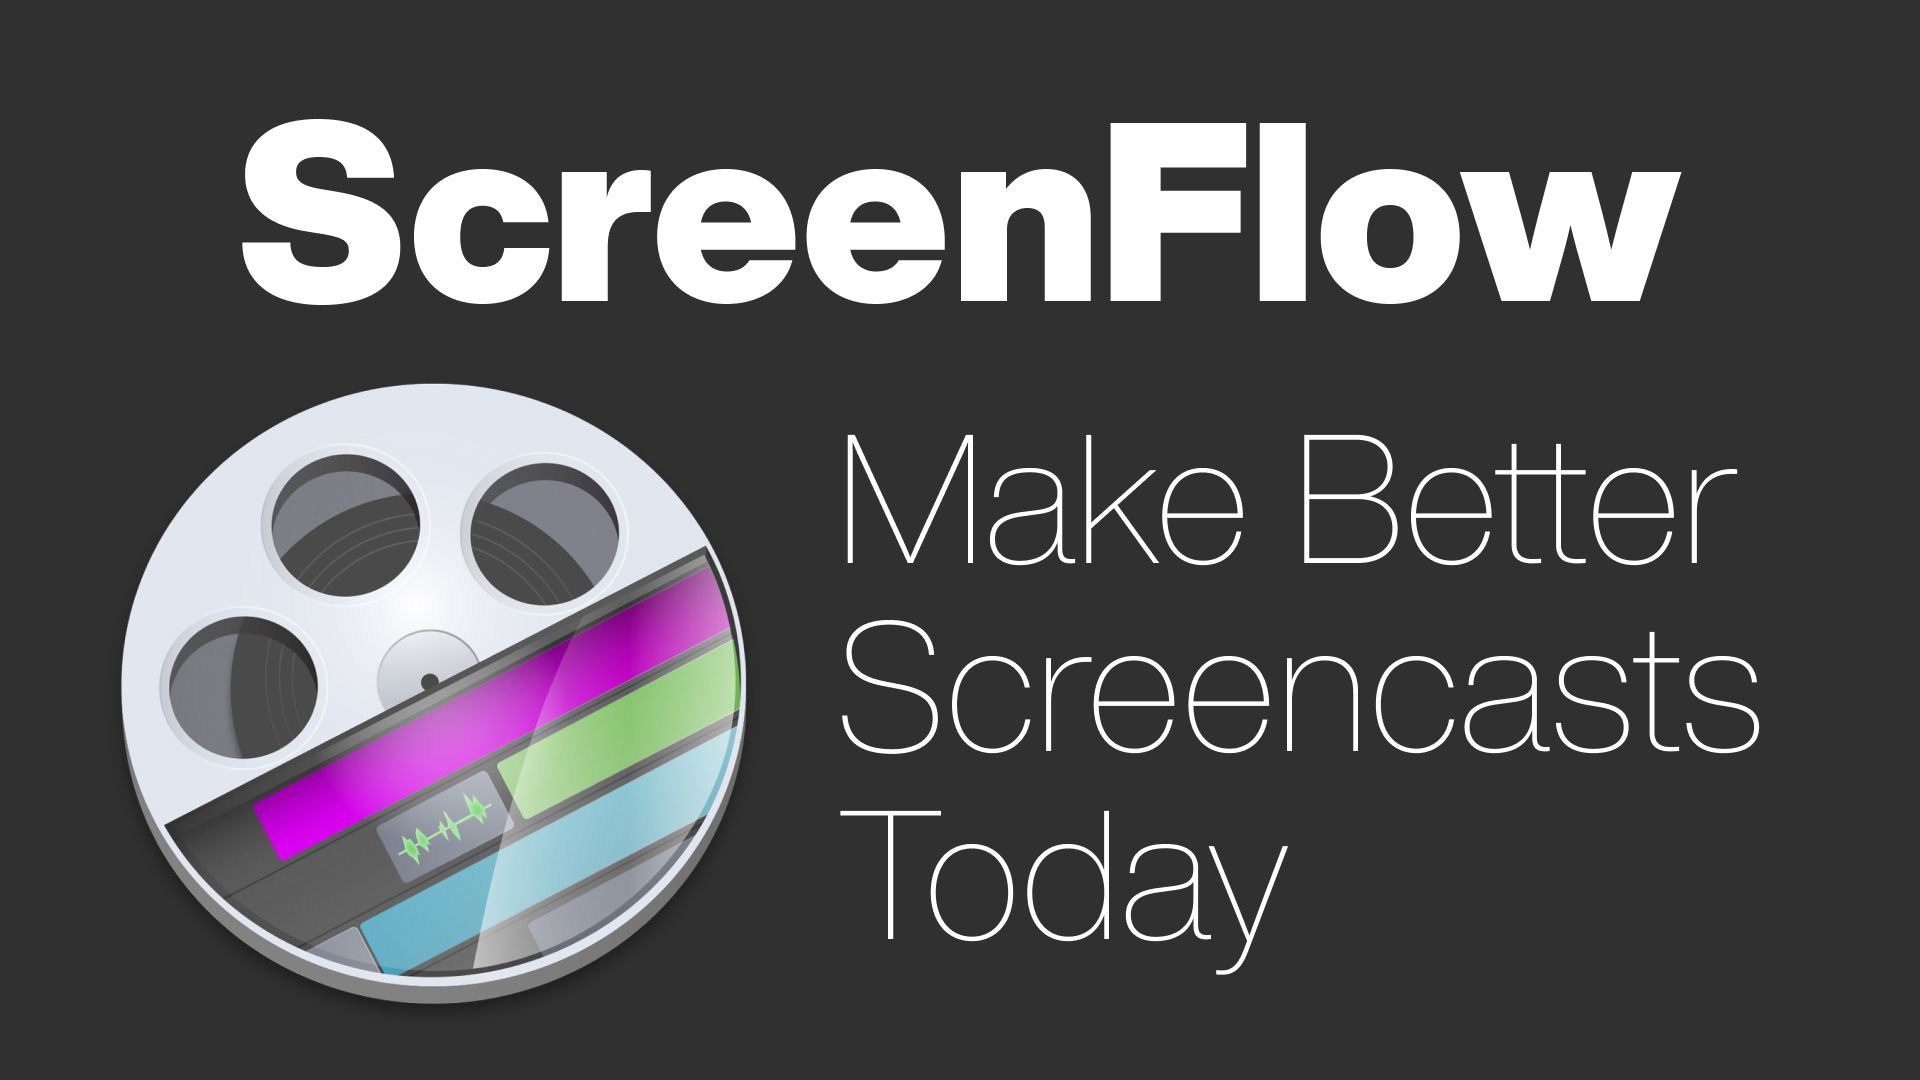 screenflow: